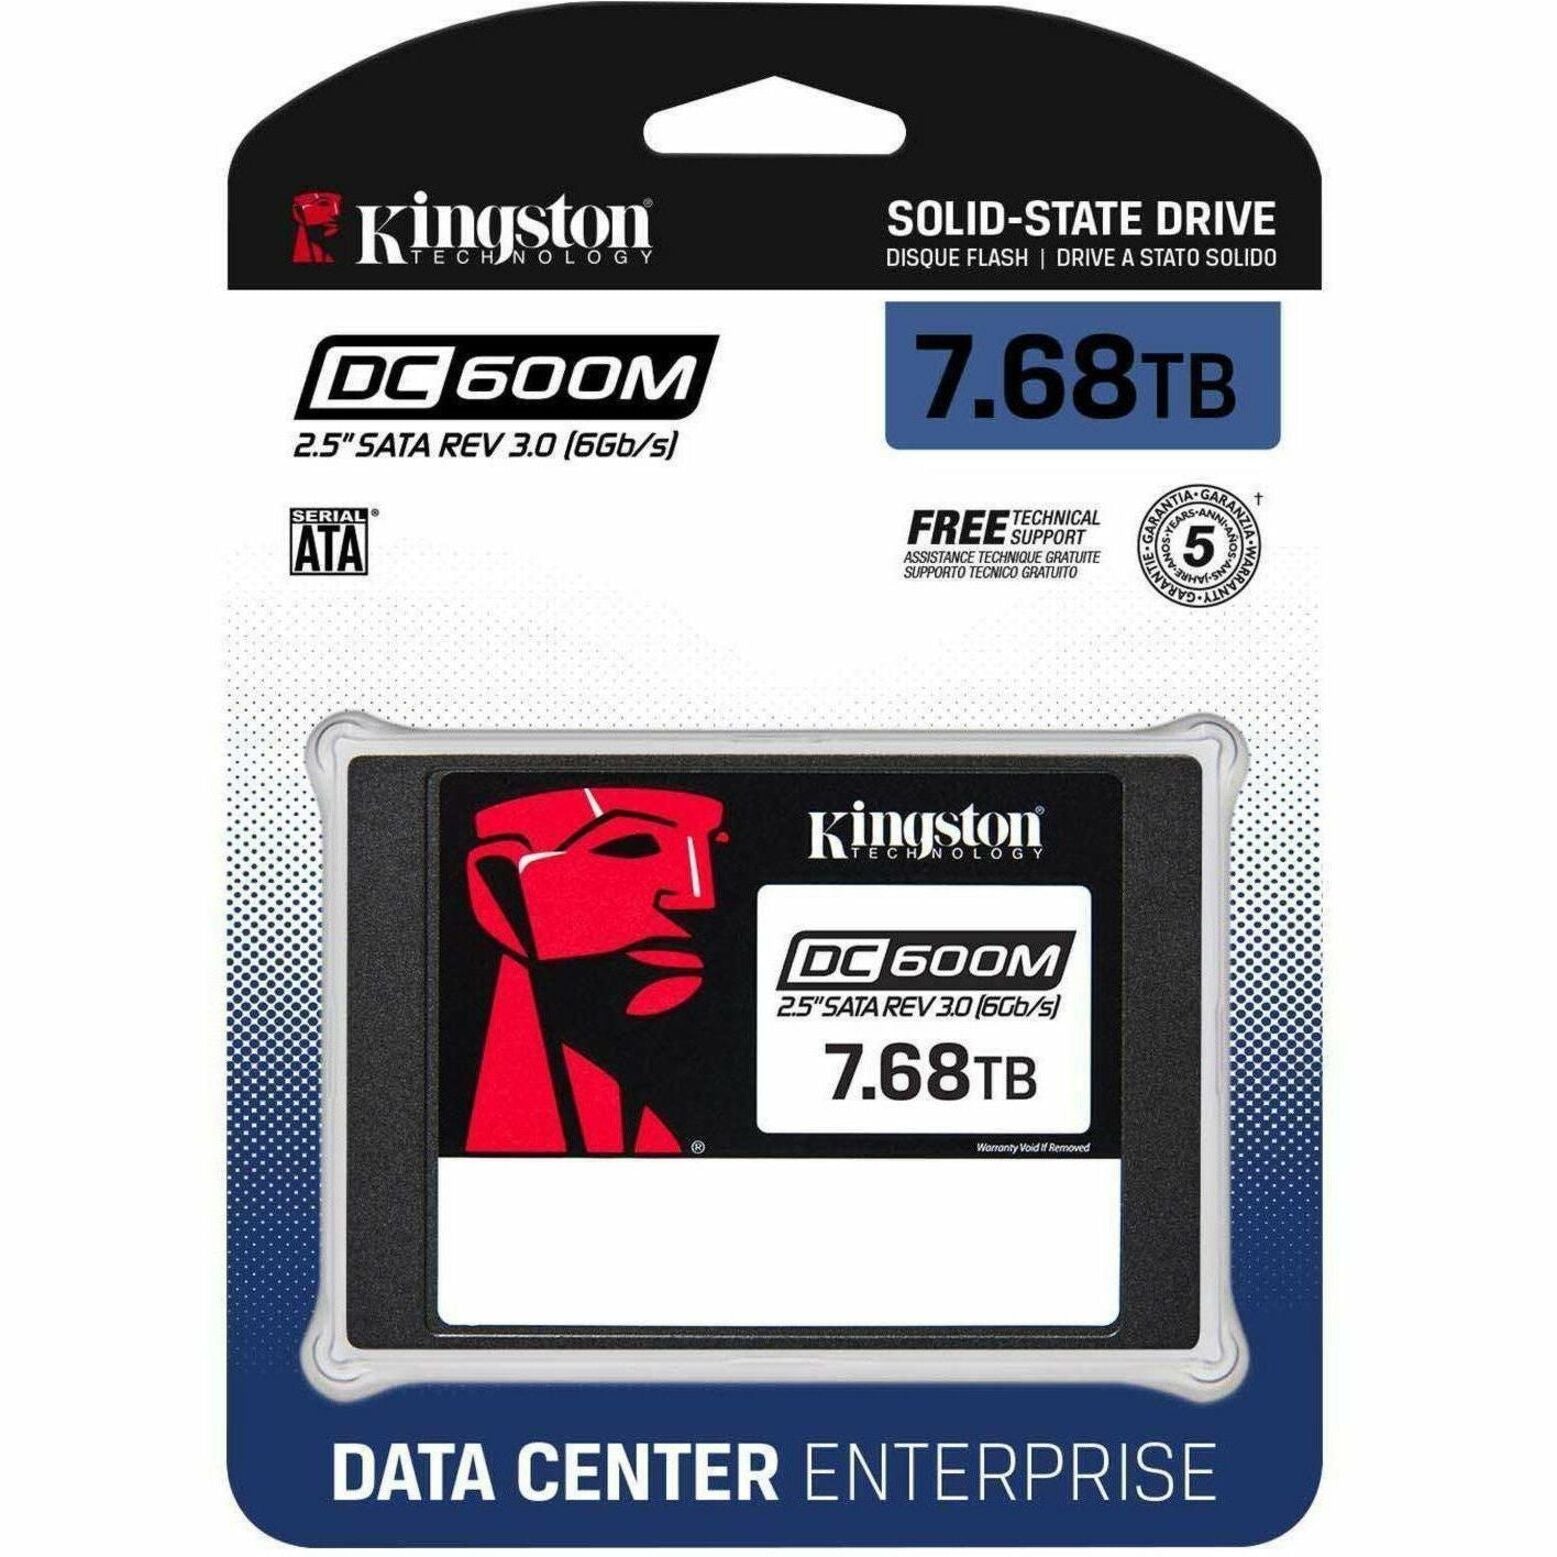 Kingston SEDC600M/7680G DC600M 2.5 Enterprise SATA SSD 7.5TB Speicherkapazität 5 Jahre Garantie